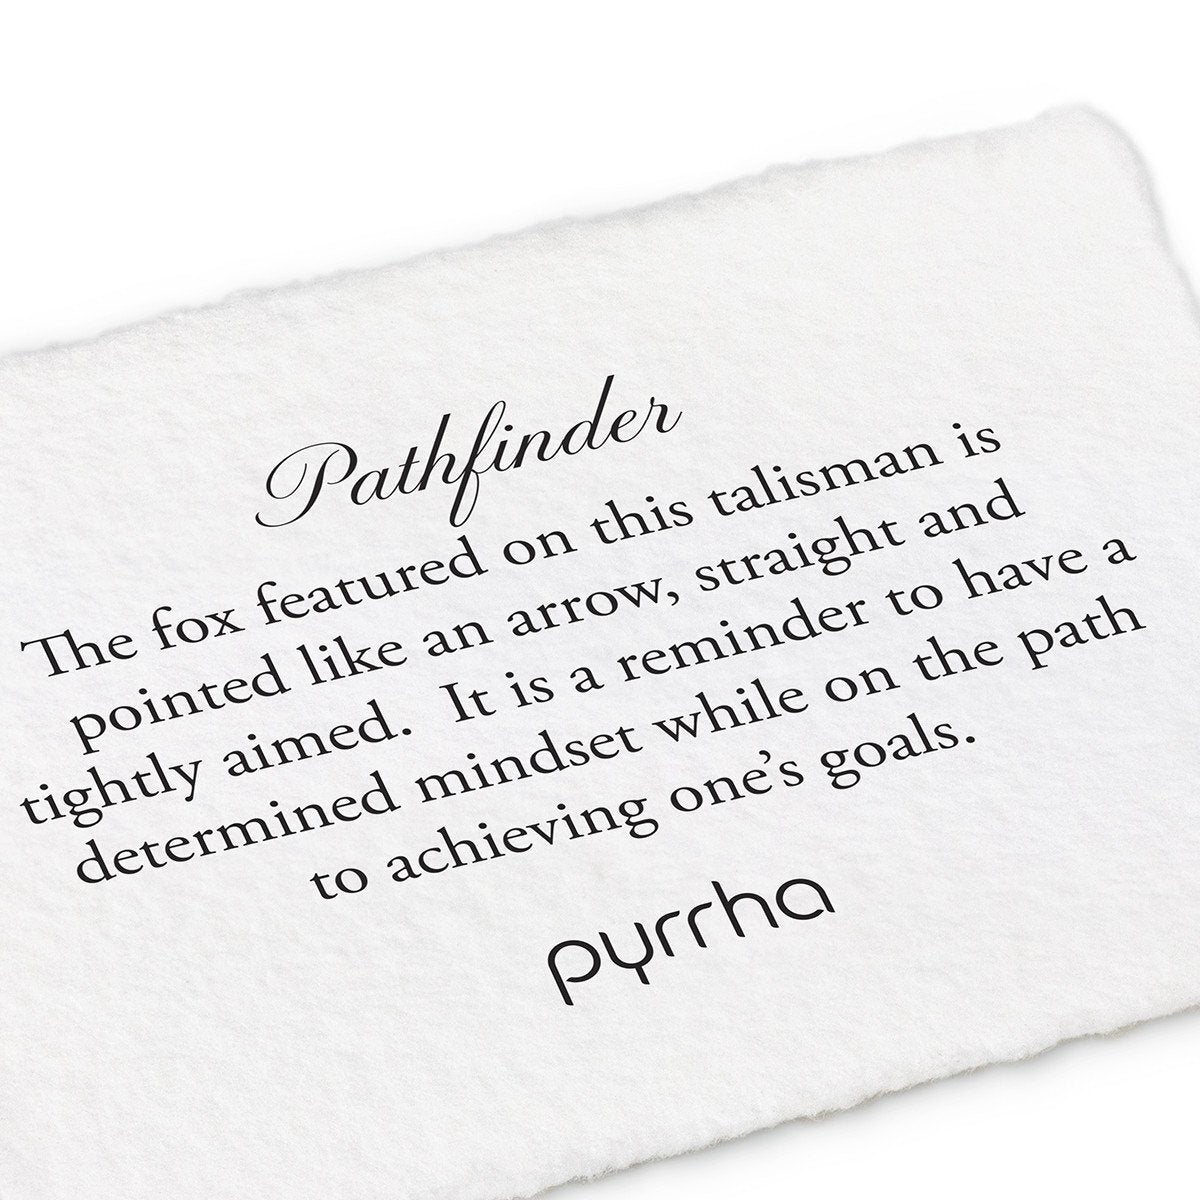 Pathfinder Talisman Meaning Card